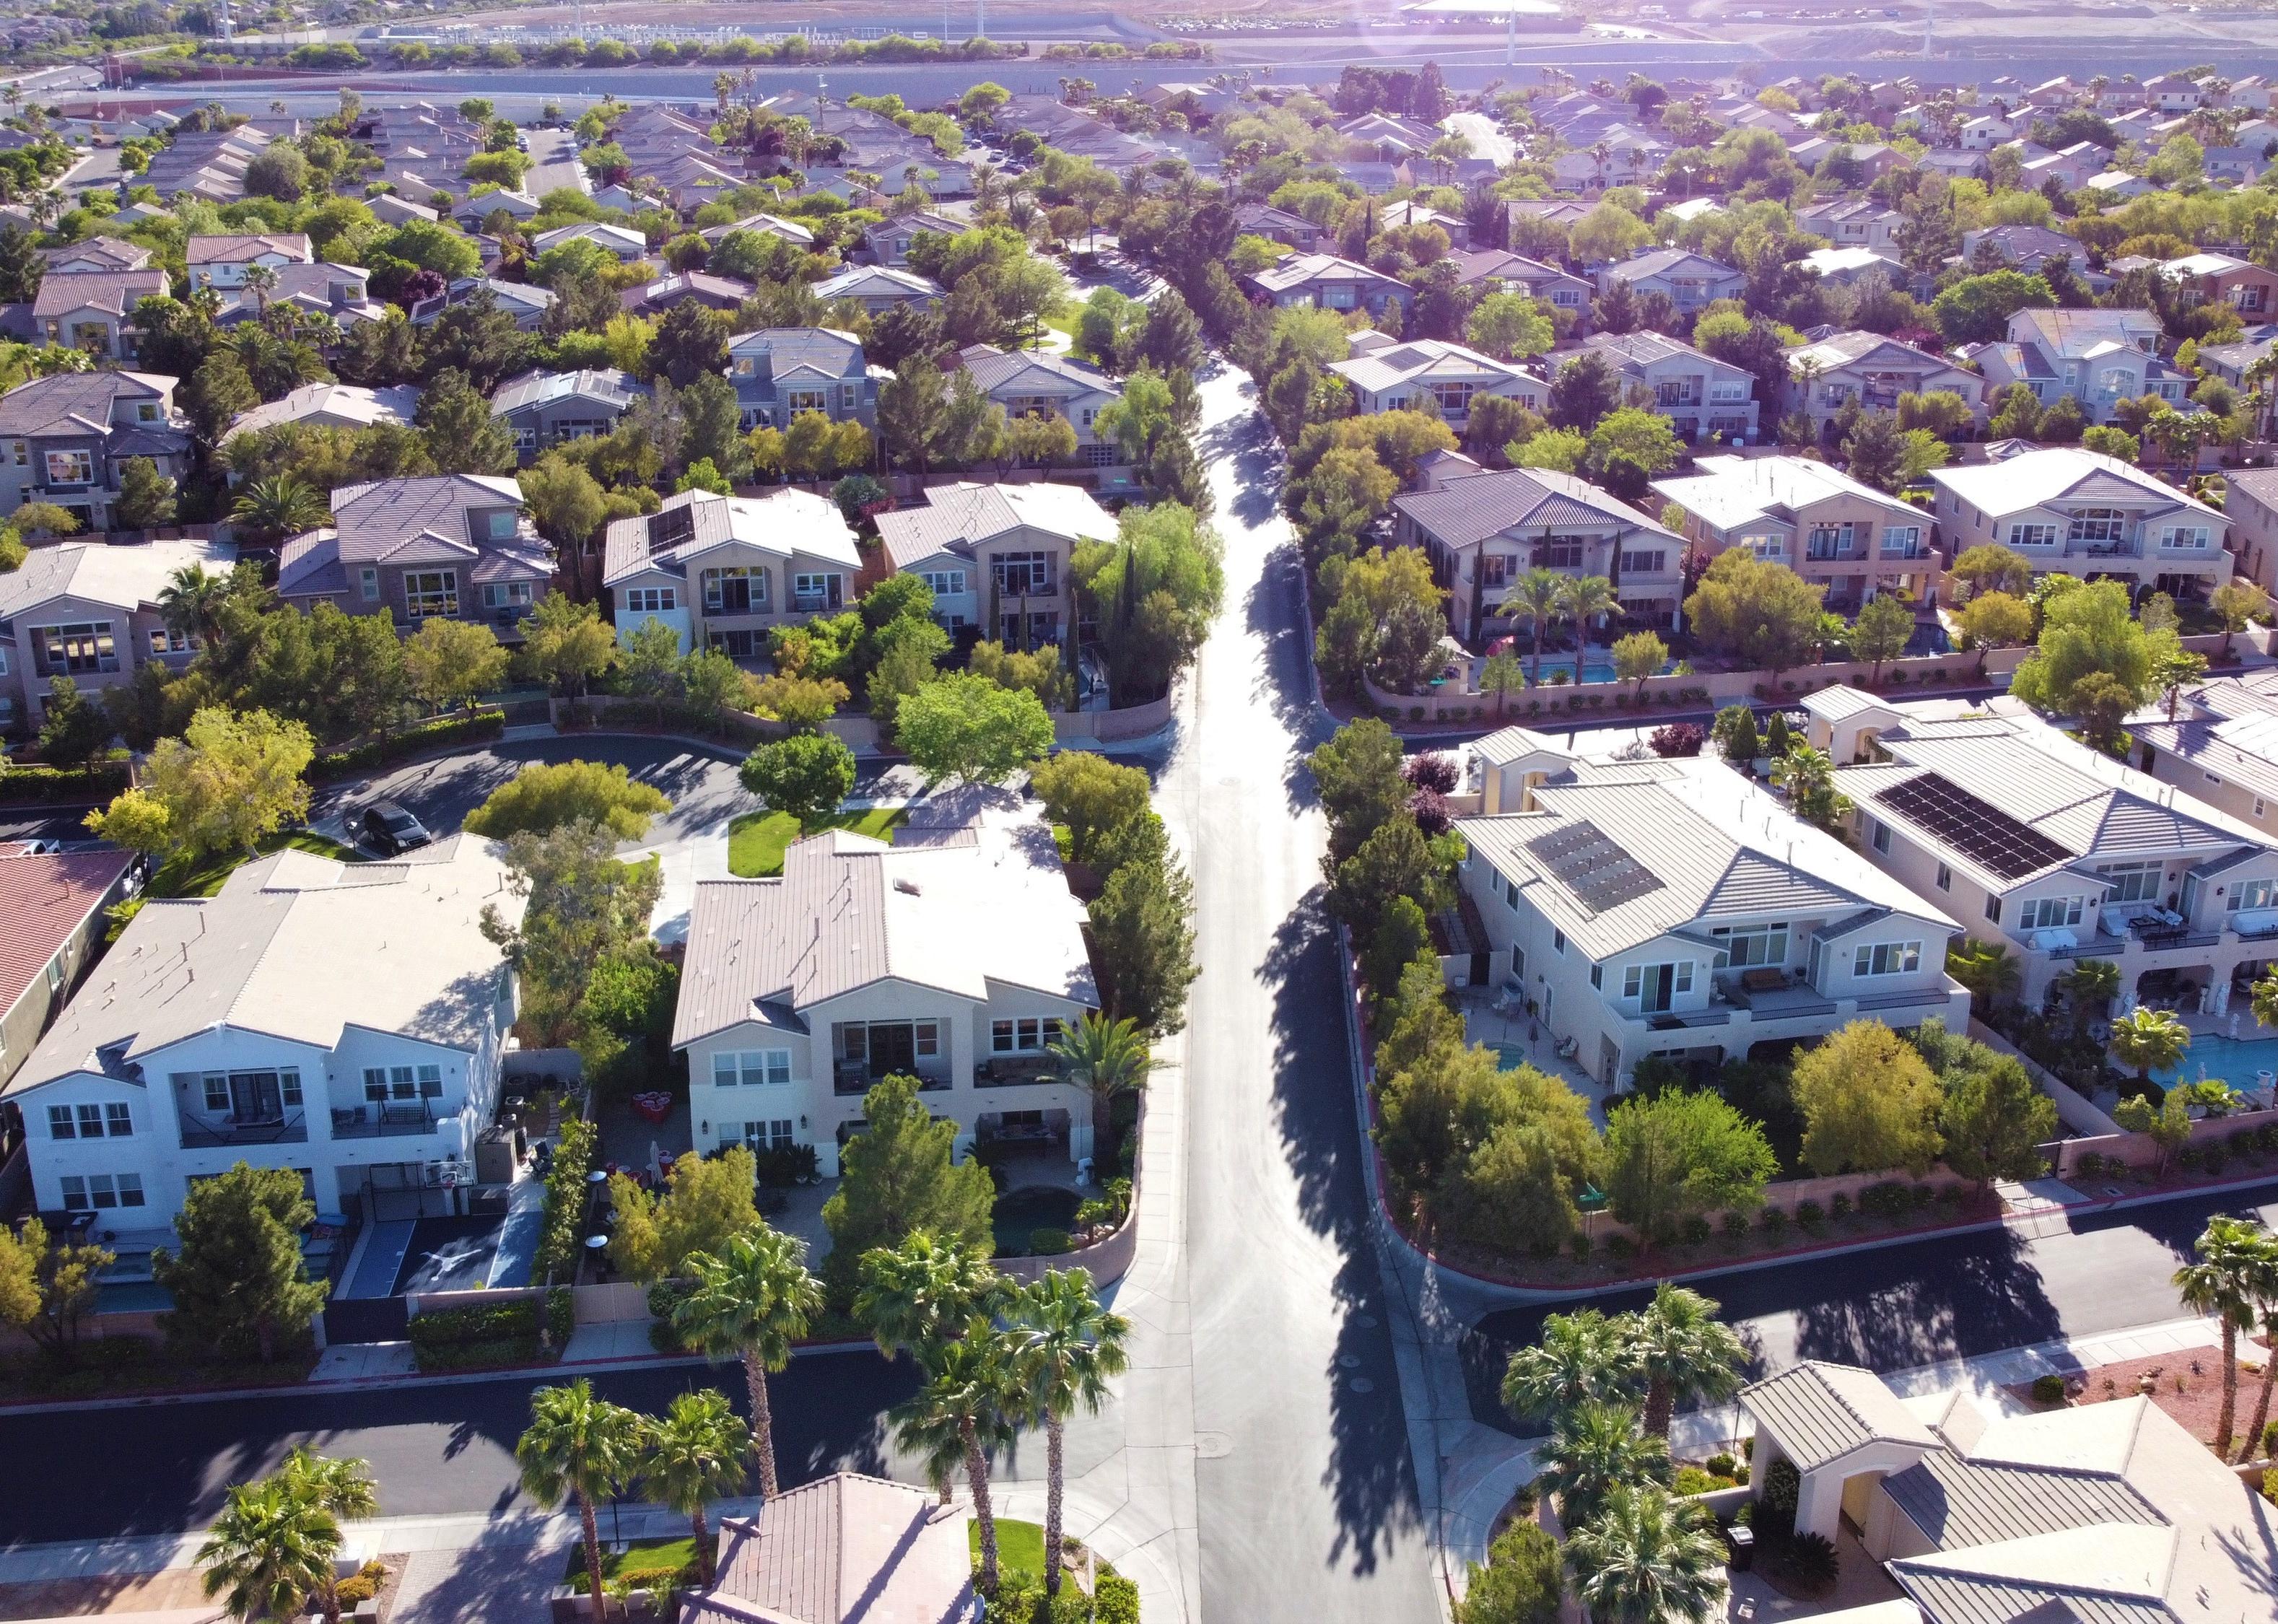 Aerial view of suburban neighborhood road during late afternoon in Las Vegas.